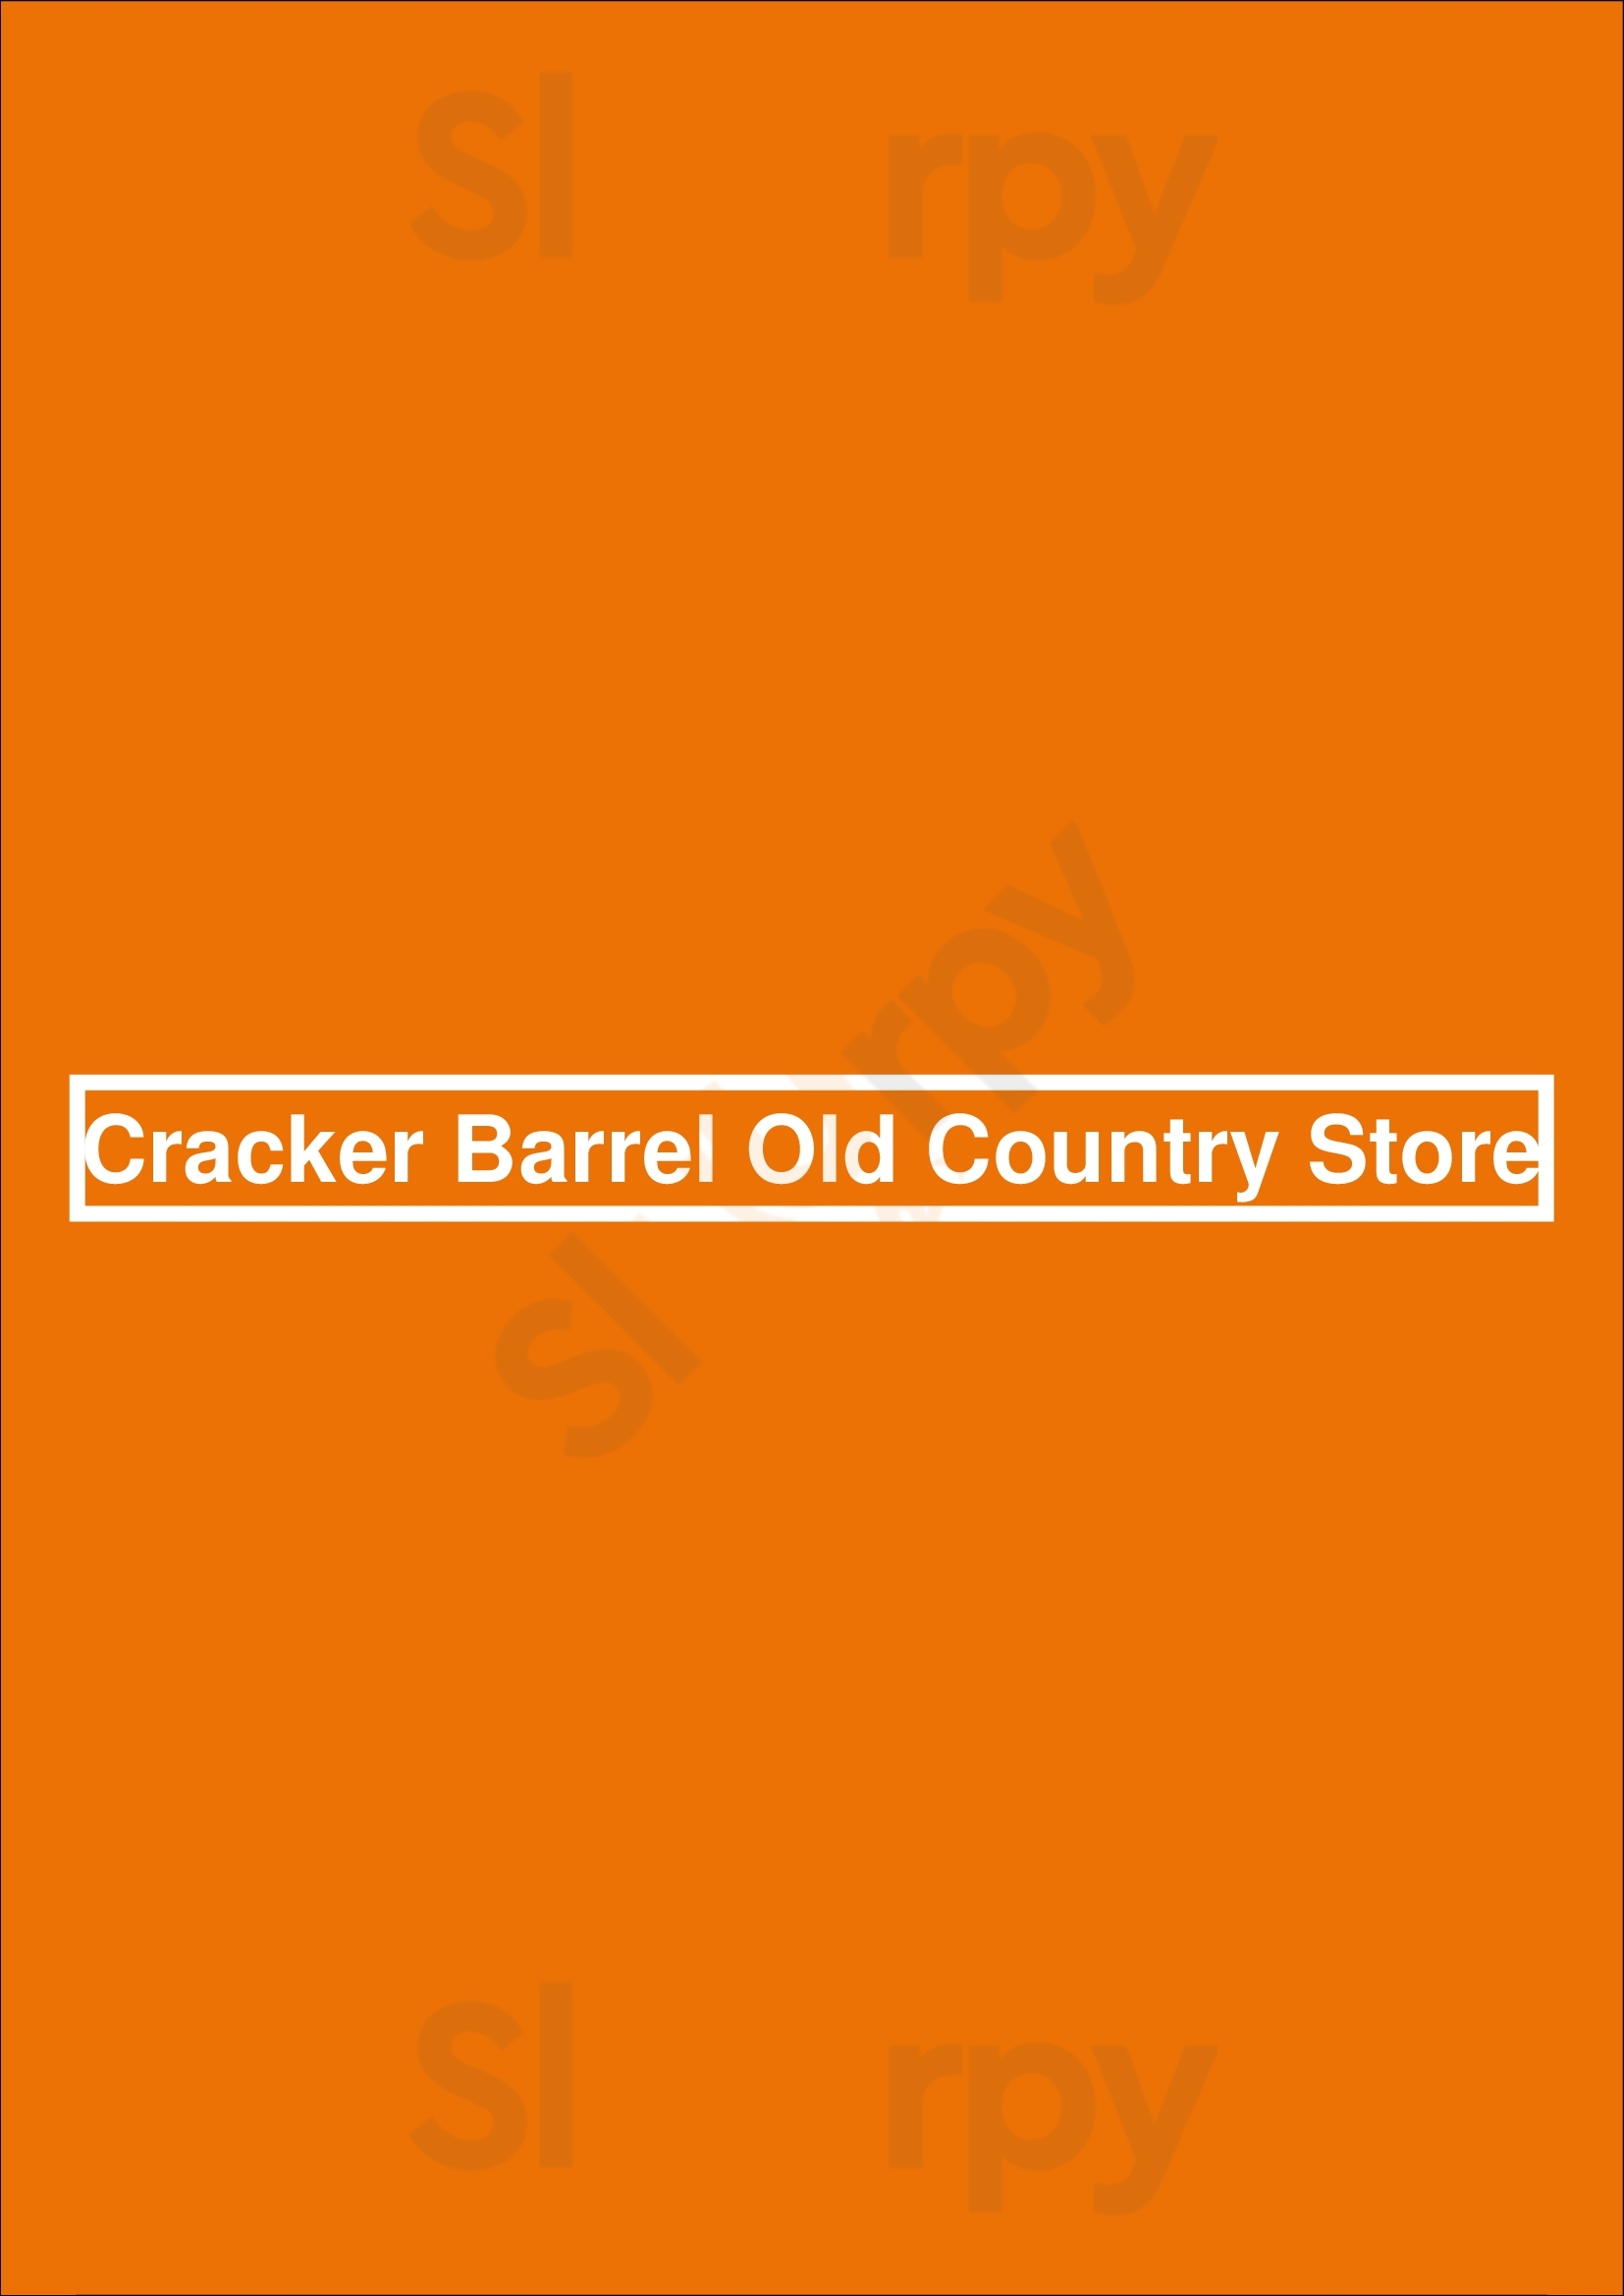 Cracker Barrel Old Country Store Middletown Menu - 1